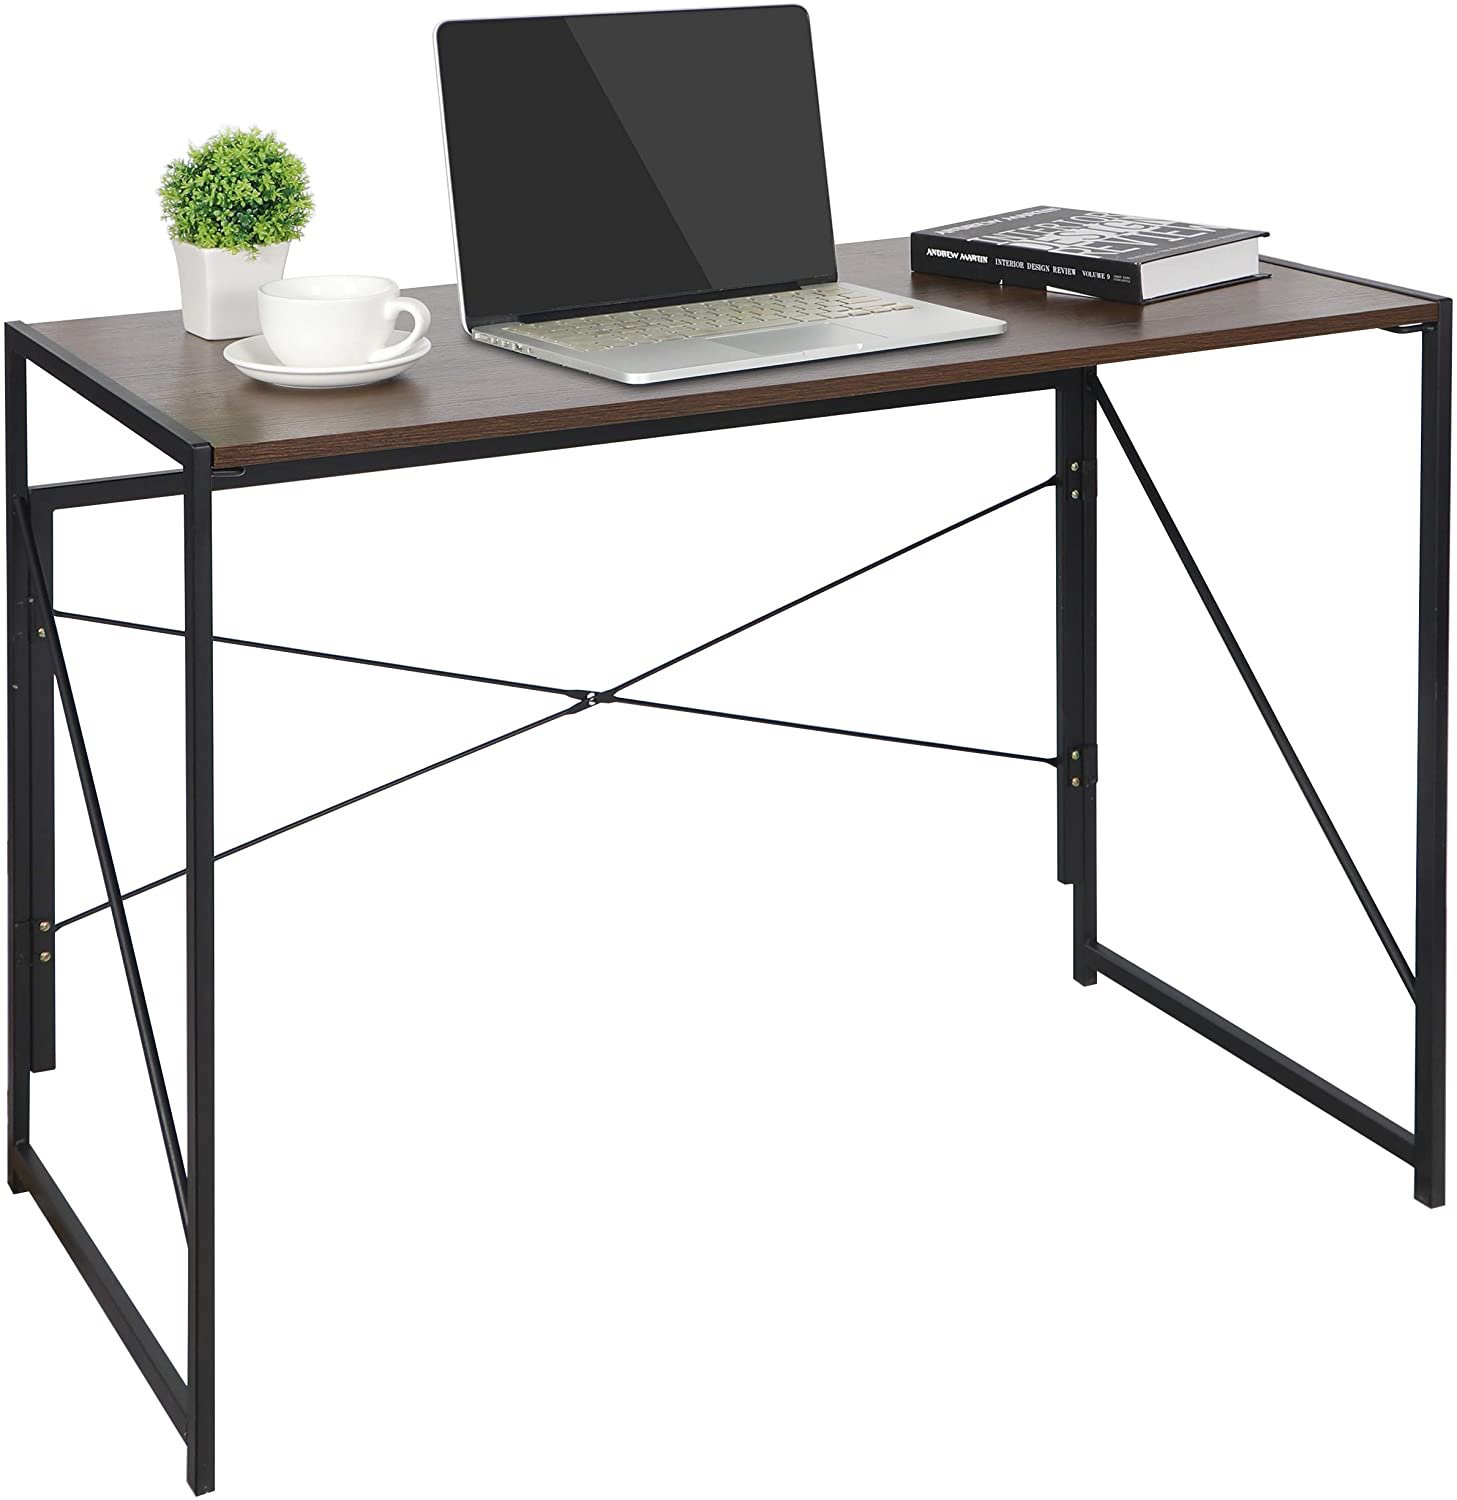 Zenstyle Folding Desk Reco